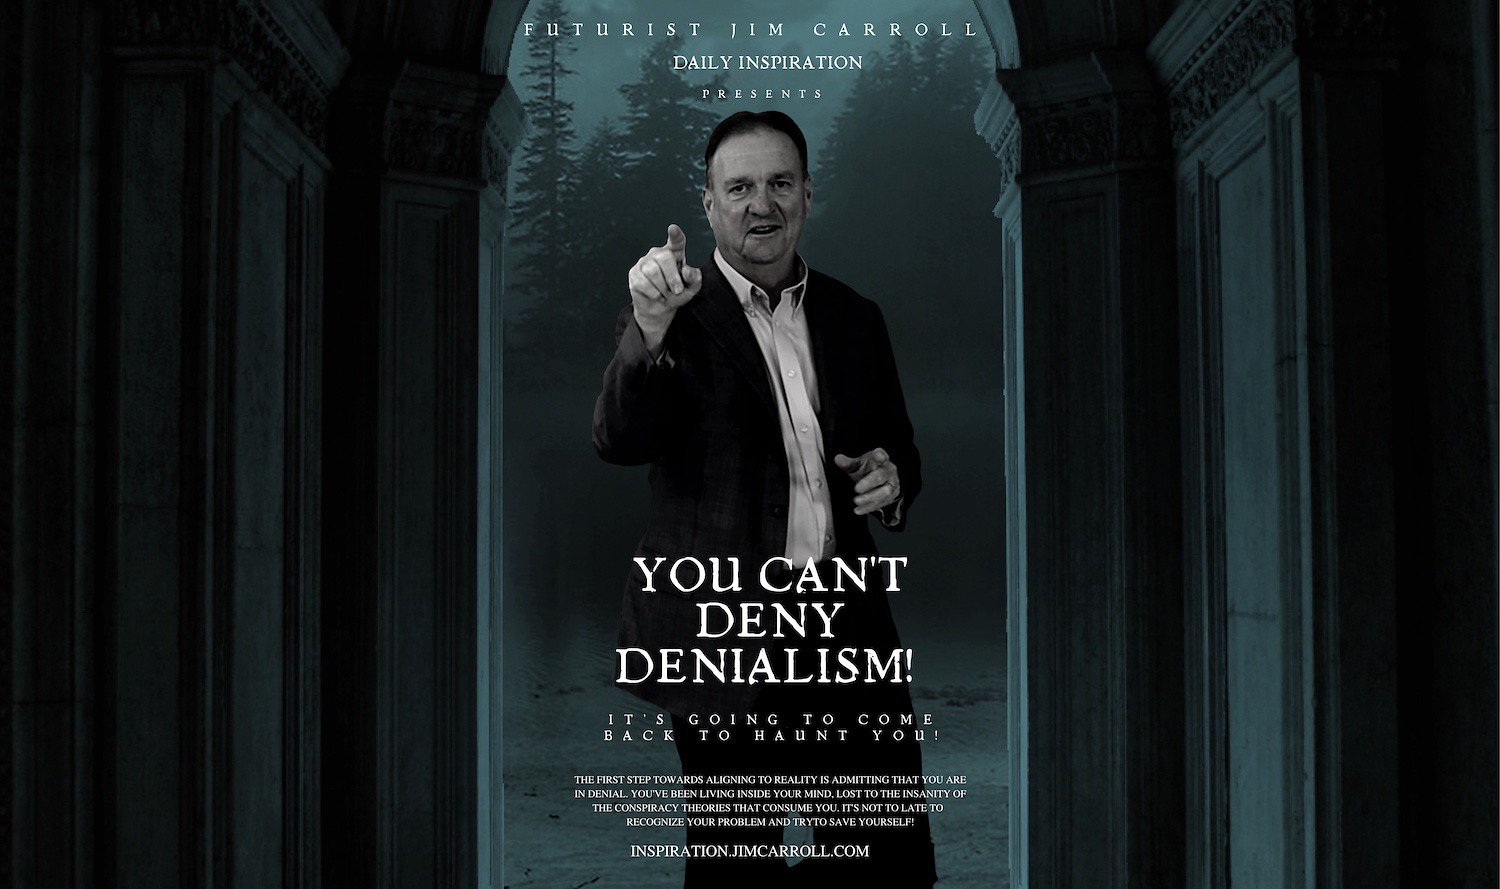 "You can't deny denialism!" - Futurist Jim Carroll